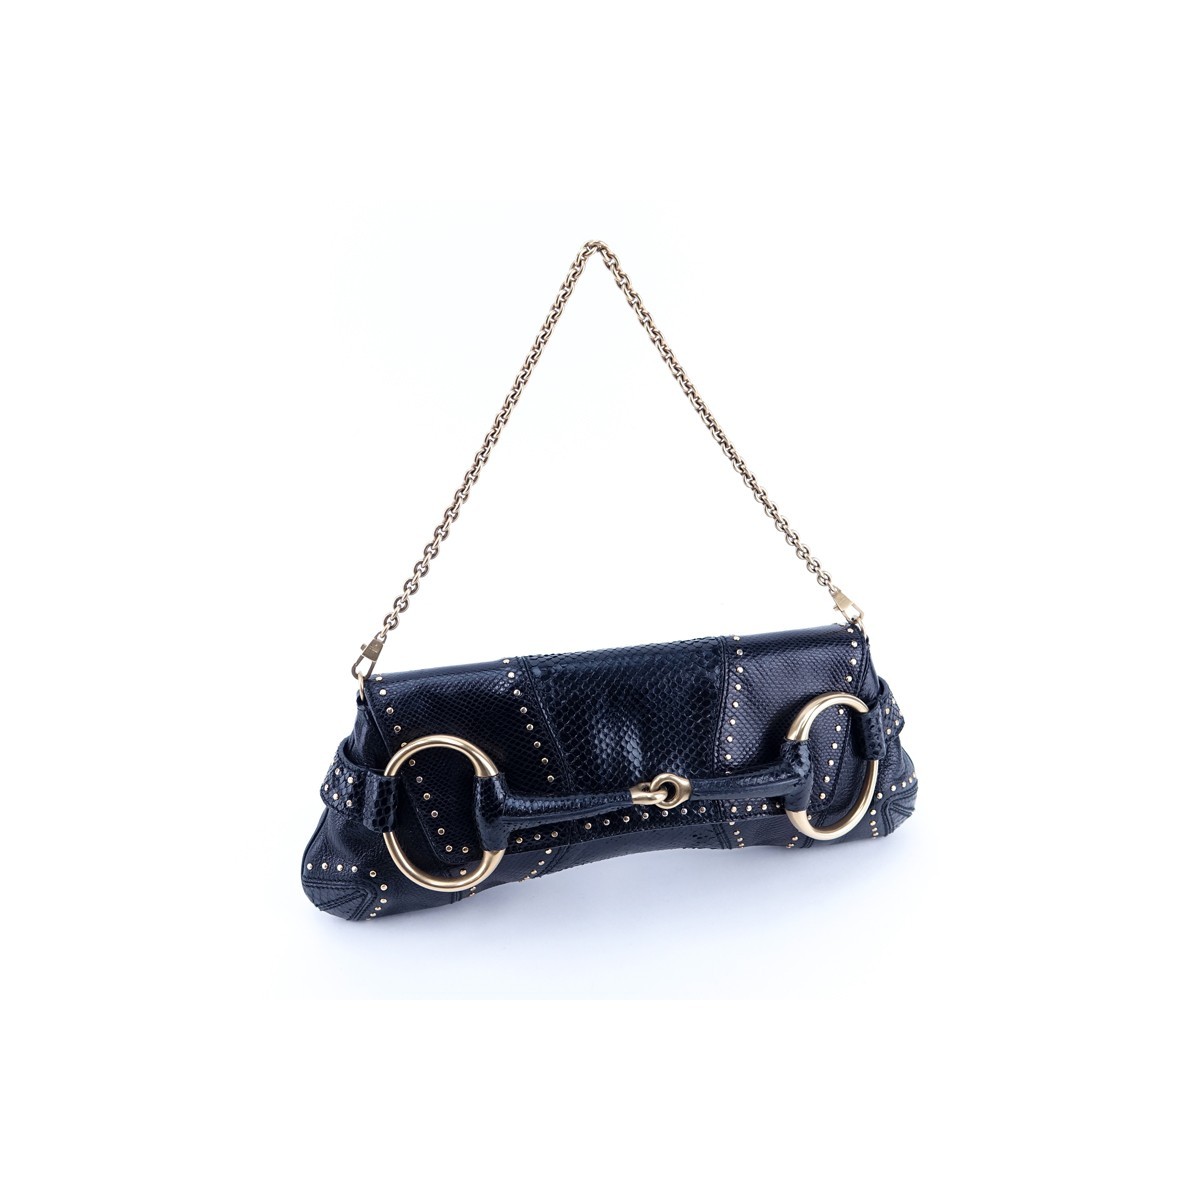 Gucci Black Snake Skin And Leather Horsebit 1921 Flap Handbag. Brushed gold hardware.